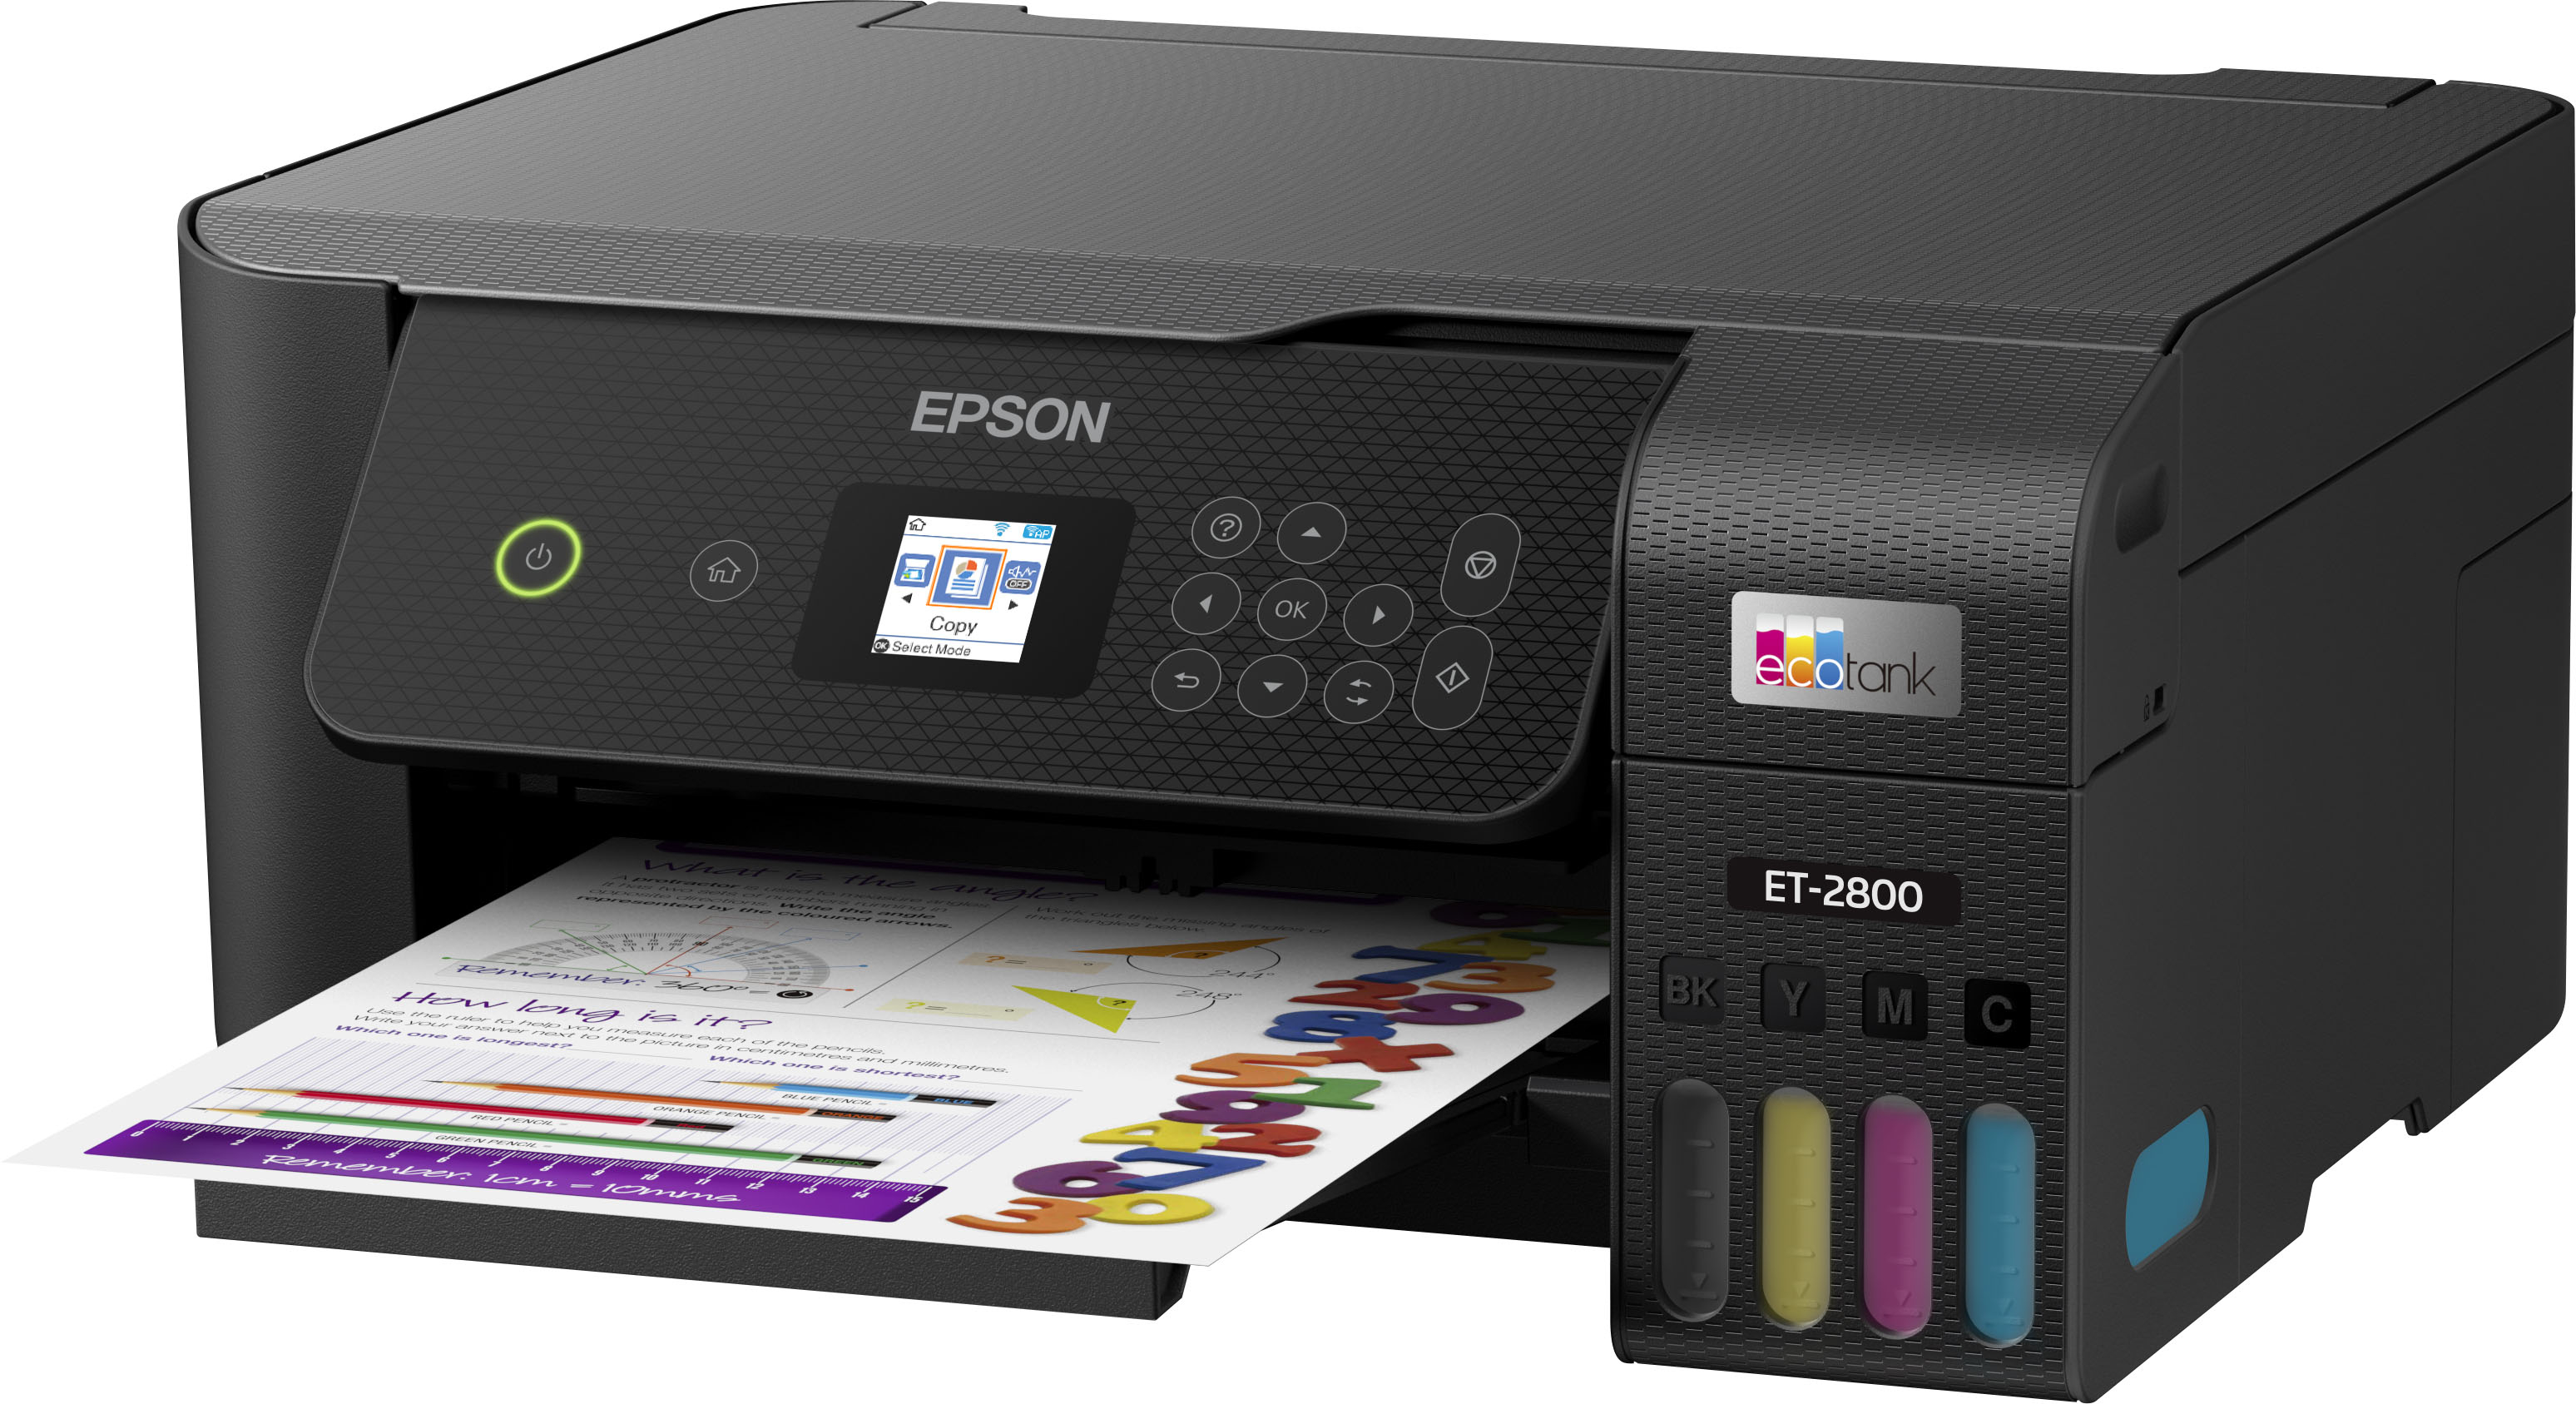 Epson EcoTank ET-2850 Wireless All-in-One Cartridge-Free Supertank Printer  - Black